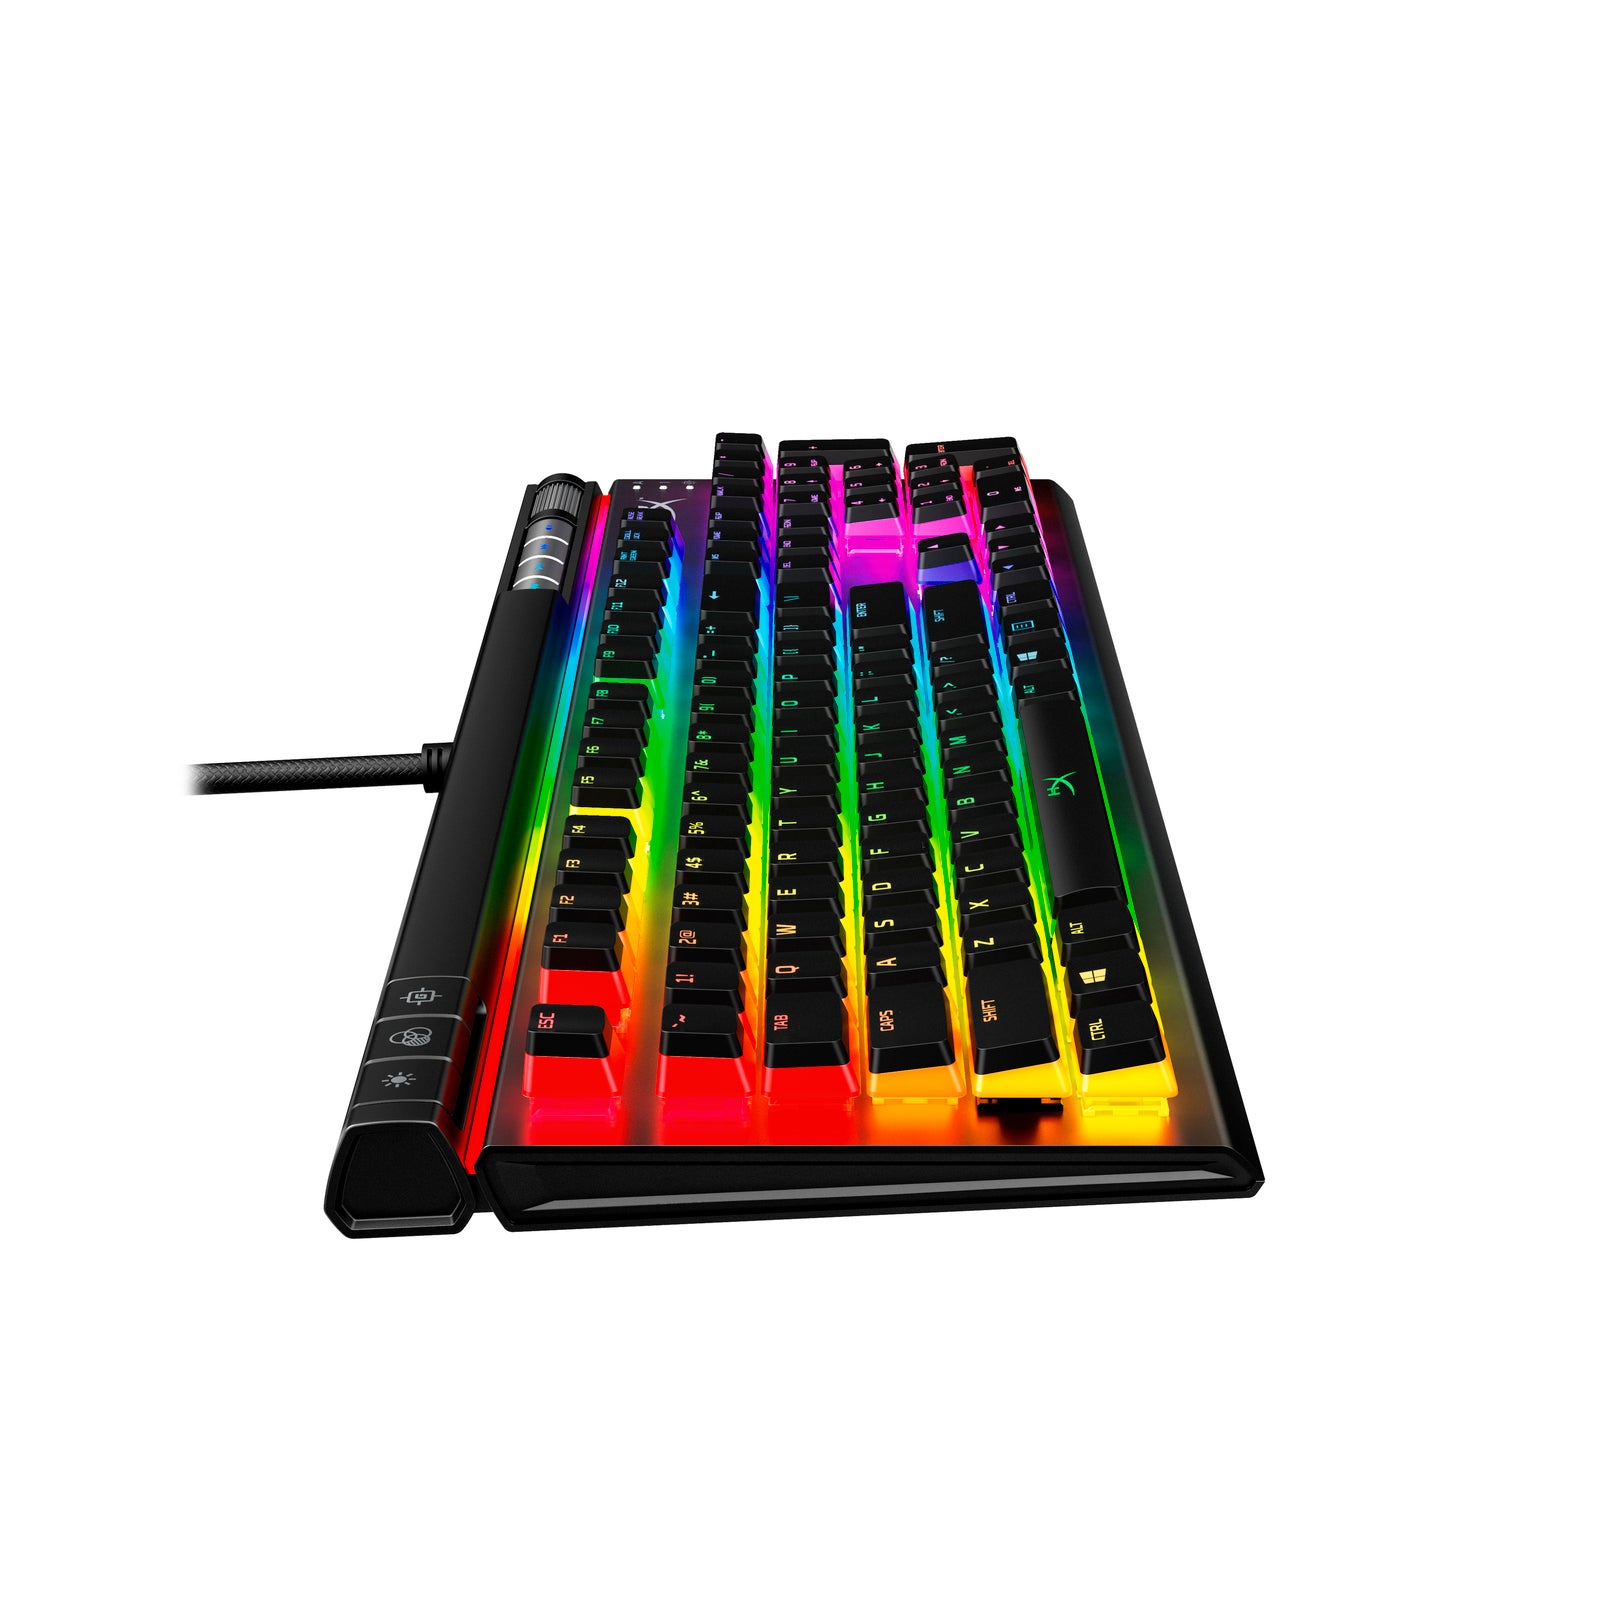 Alloy Elite 2 - Multimedia Gaming Keyboard | HyperX